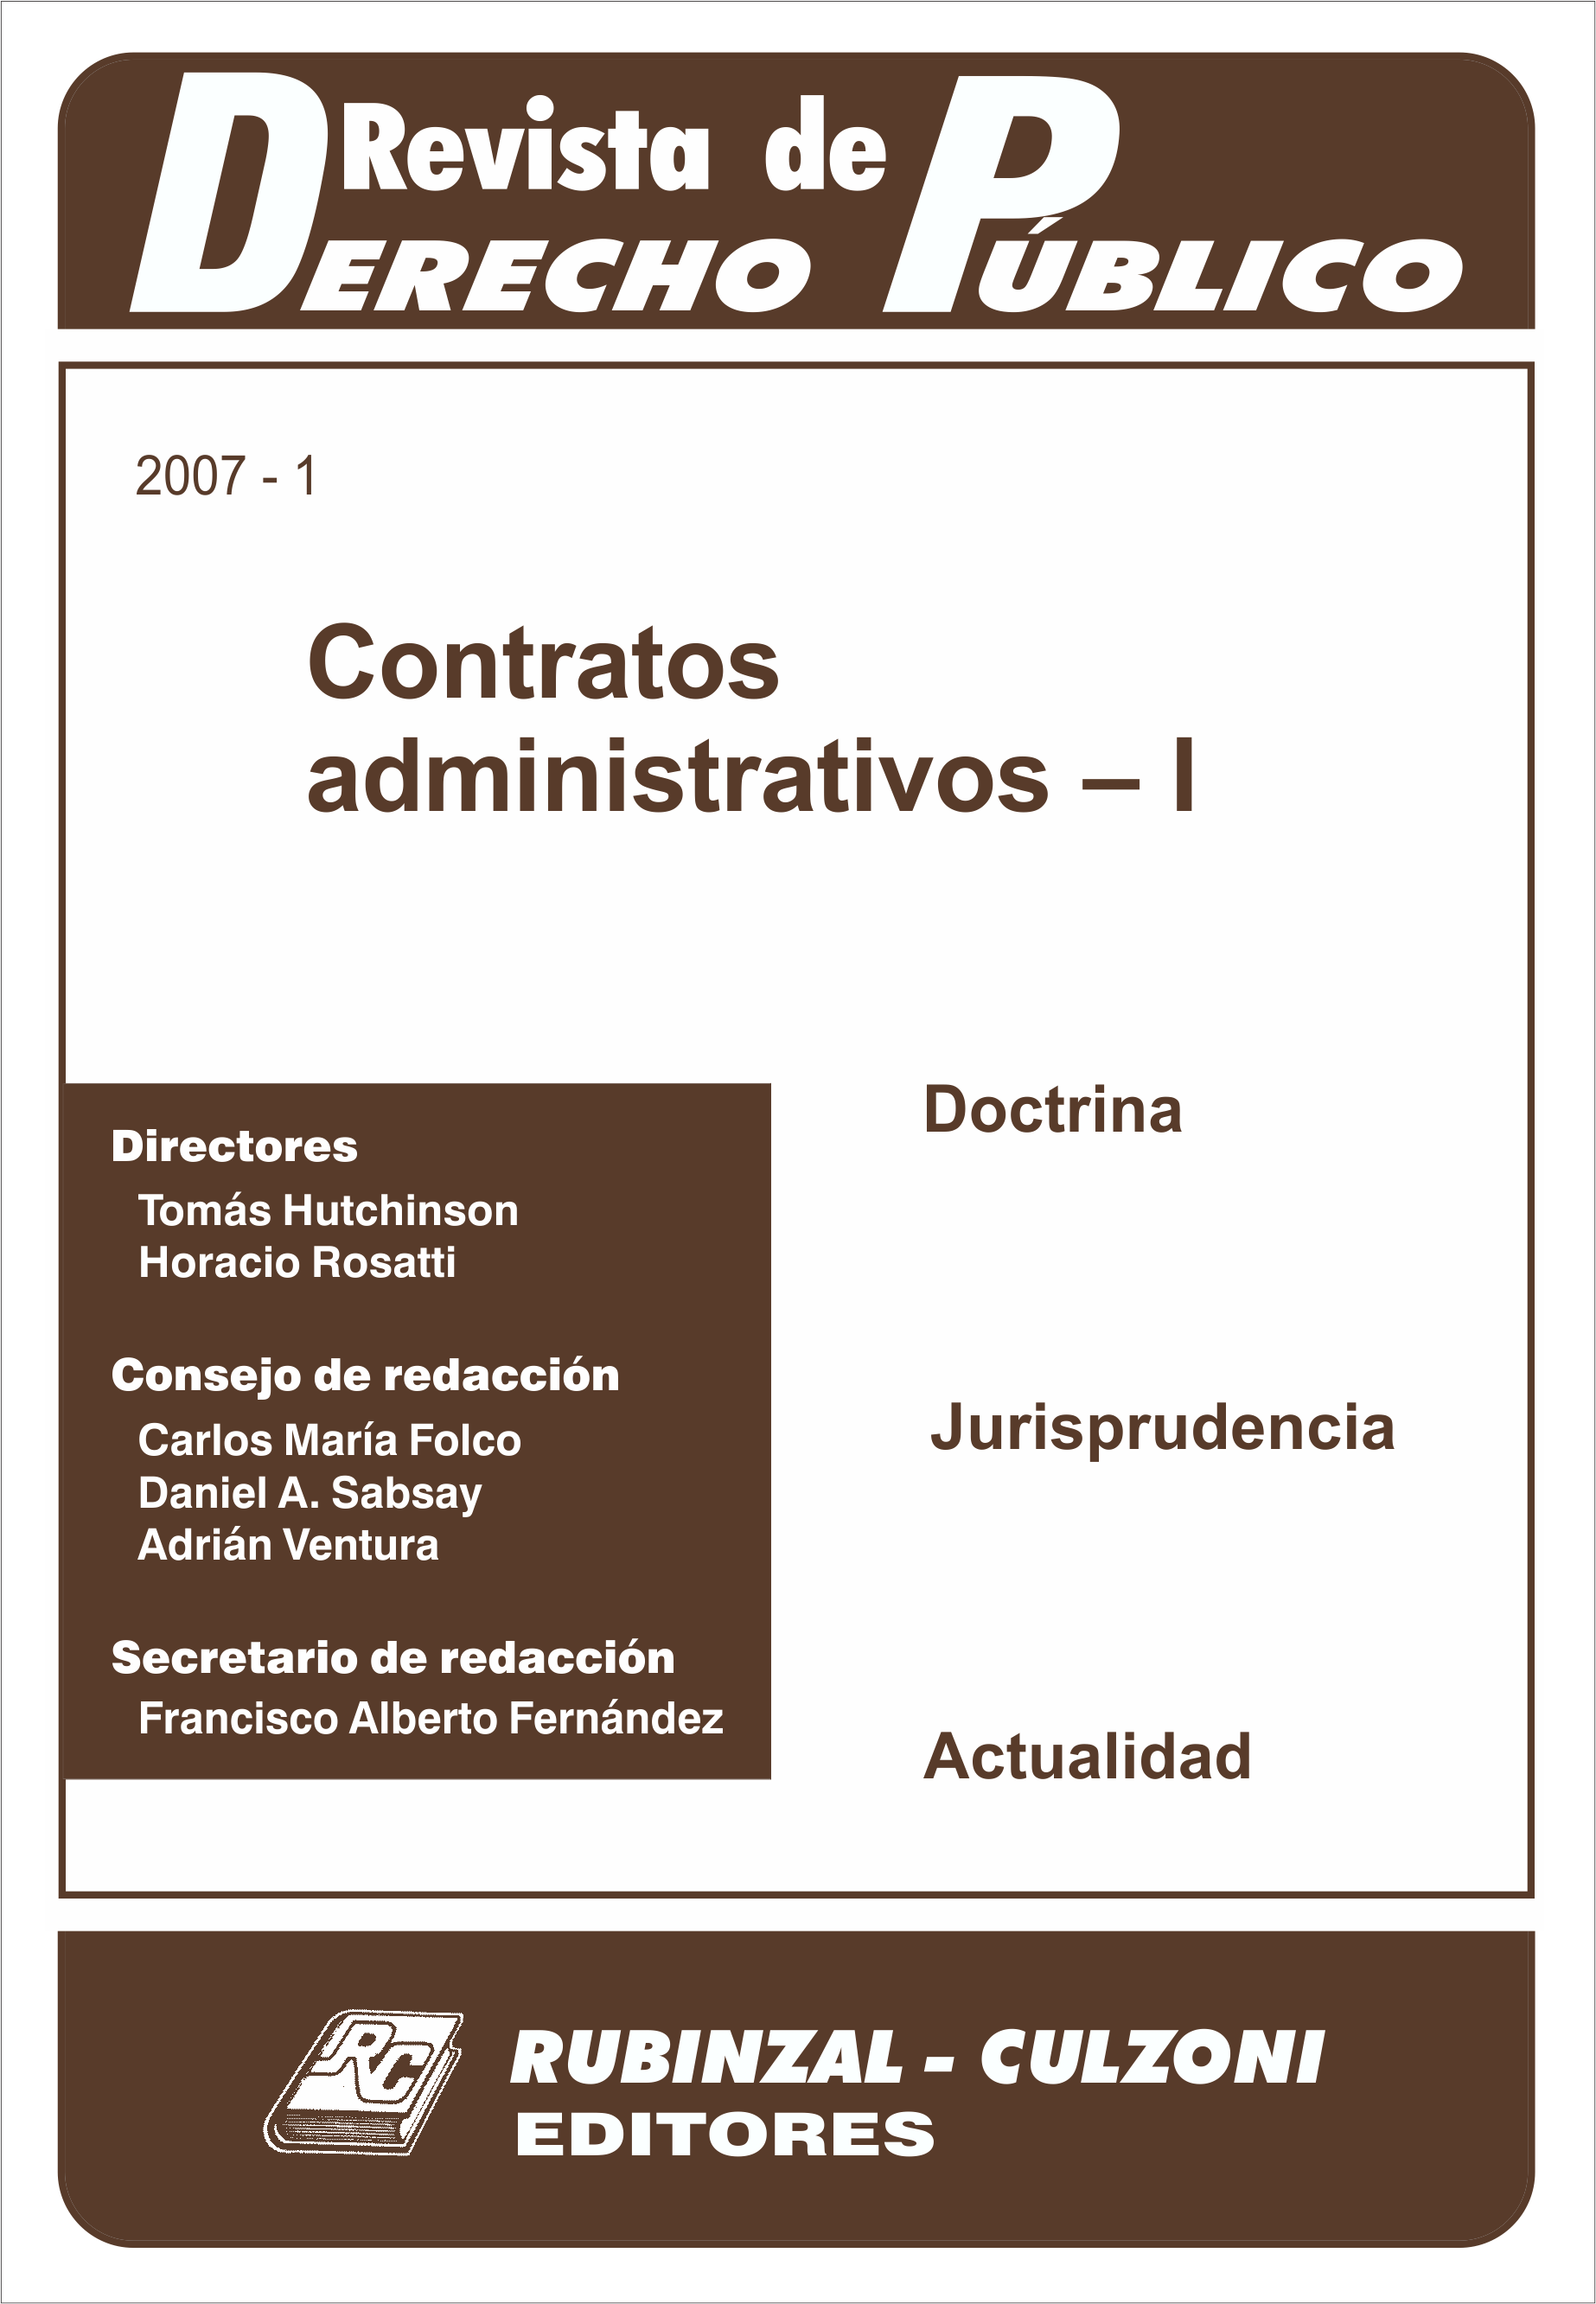 Revista de Derecho Público - Contratos administrativos - I.